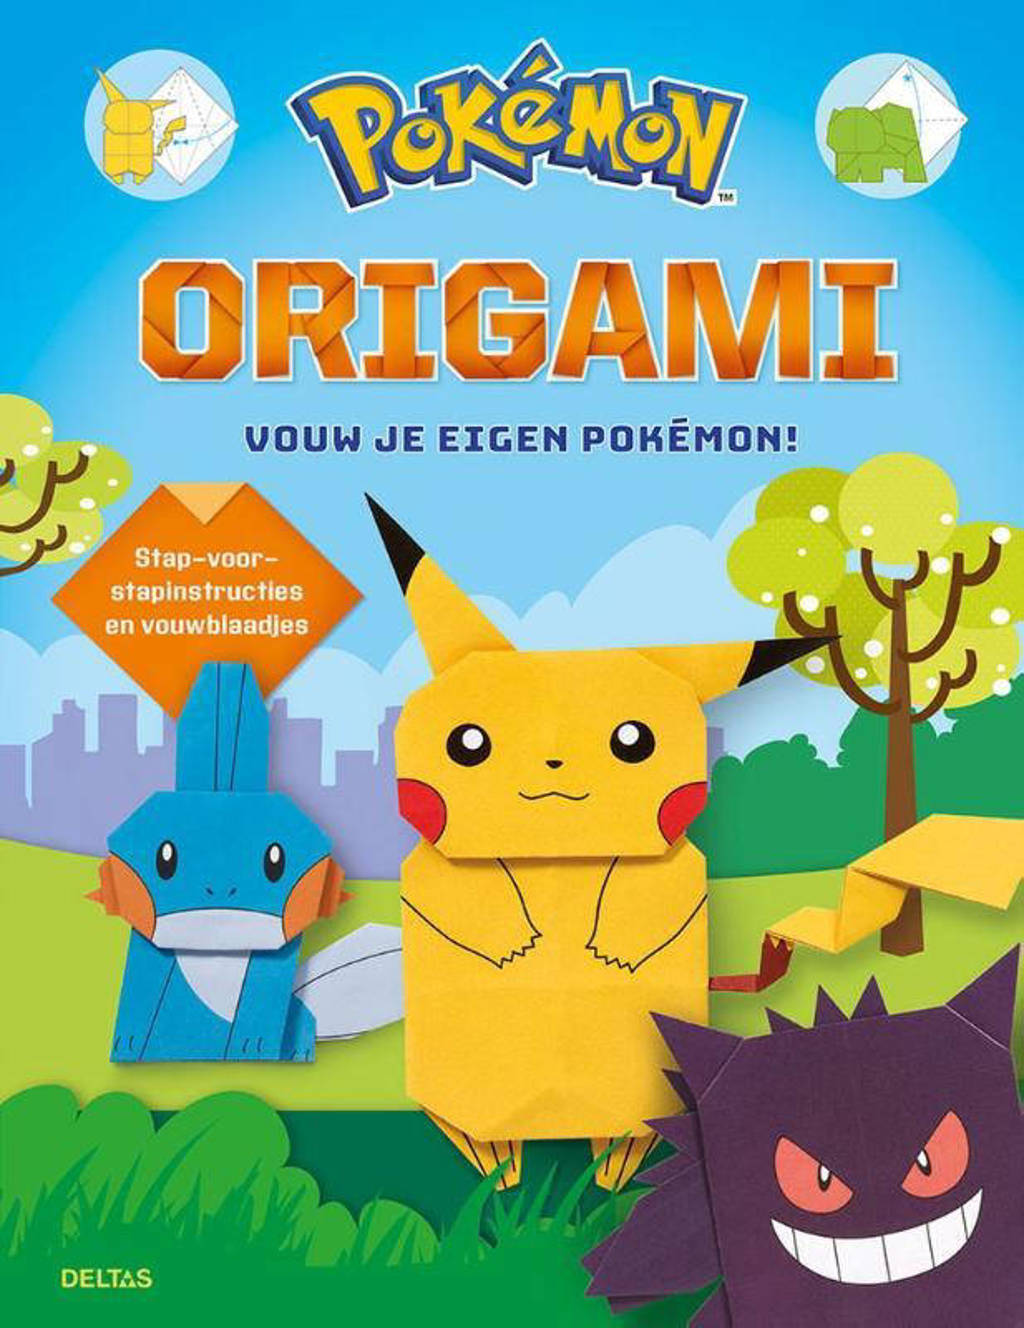 Herziening risico circulatie Pokémon origami | wehkamp